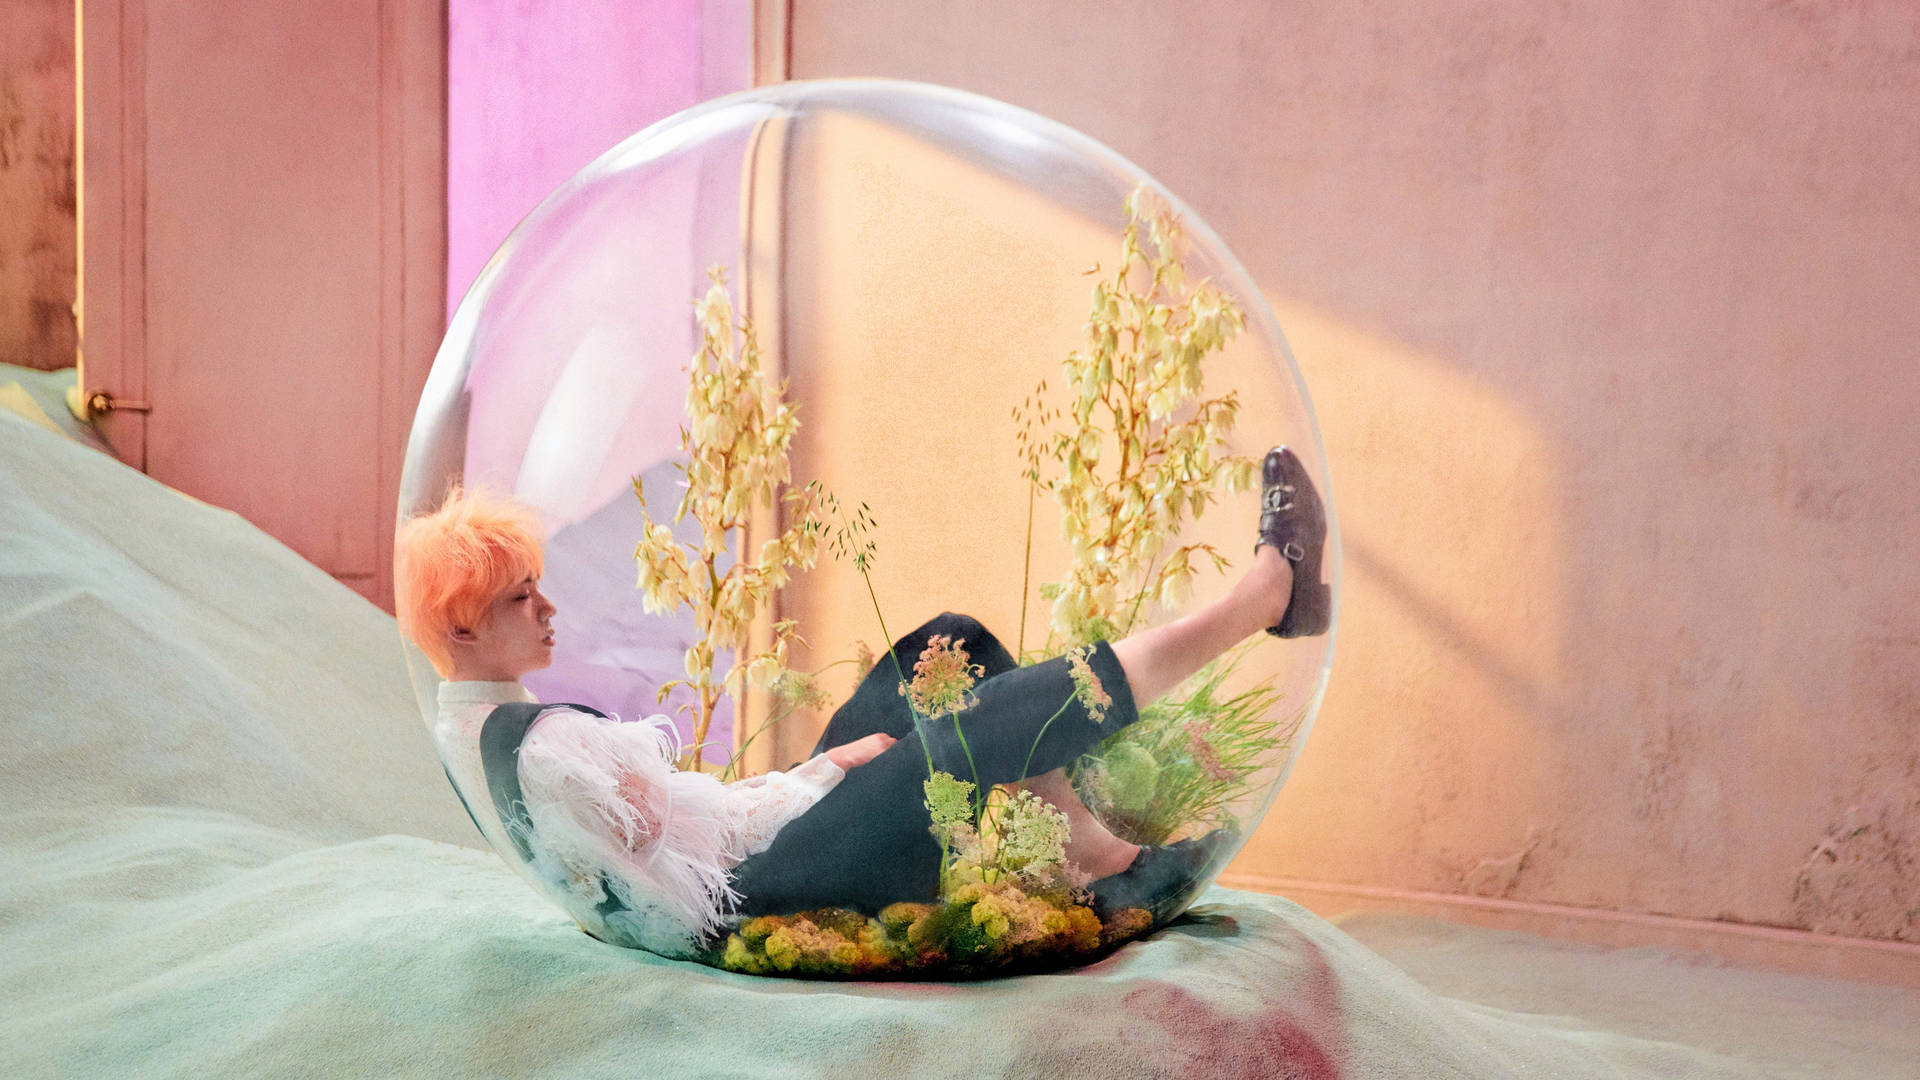 Bts Jin Inside The Floral Dome Background